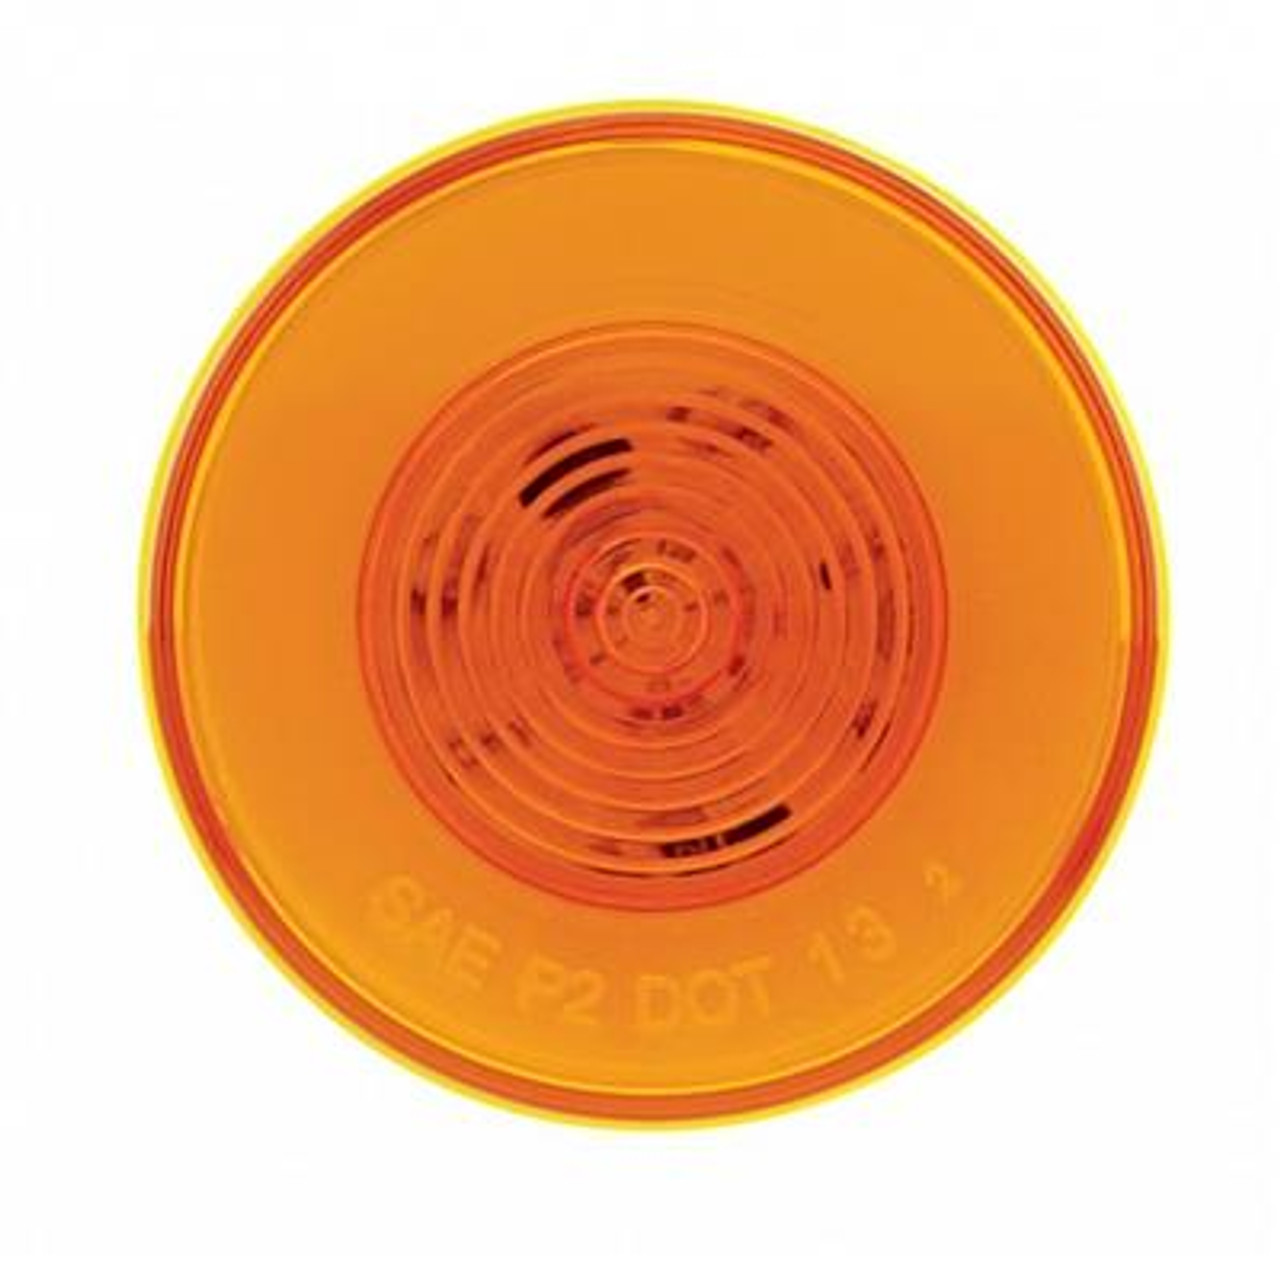 9 LED 2-1/2" Round GloLight (Clearance/Marker) - Amber LED/Amber Lens